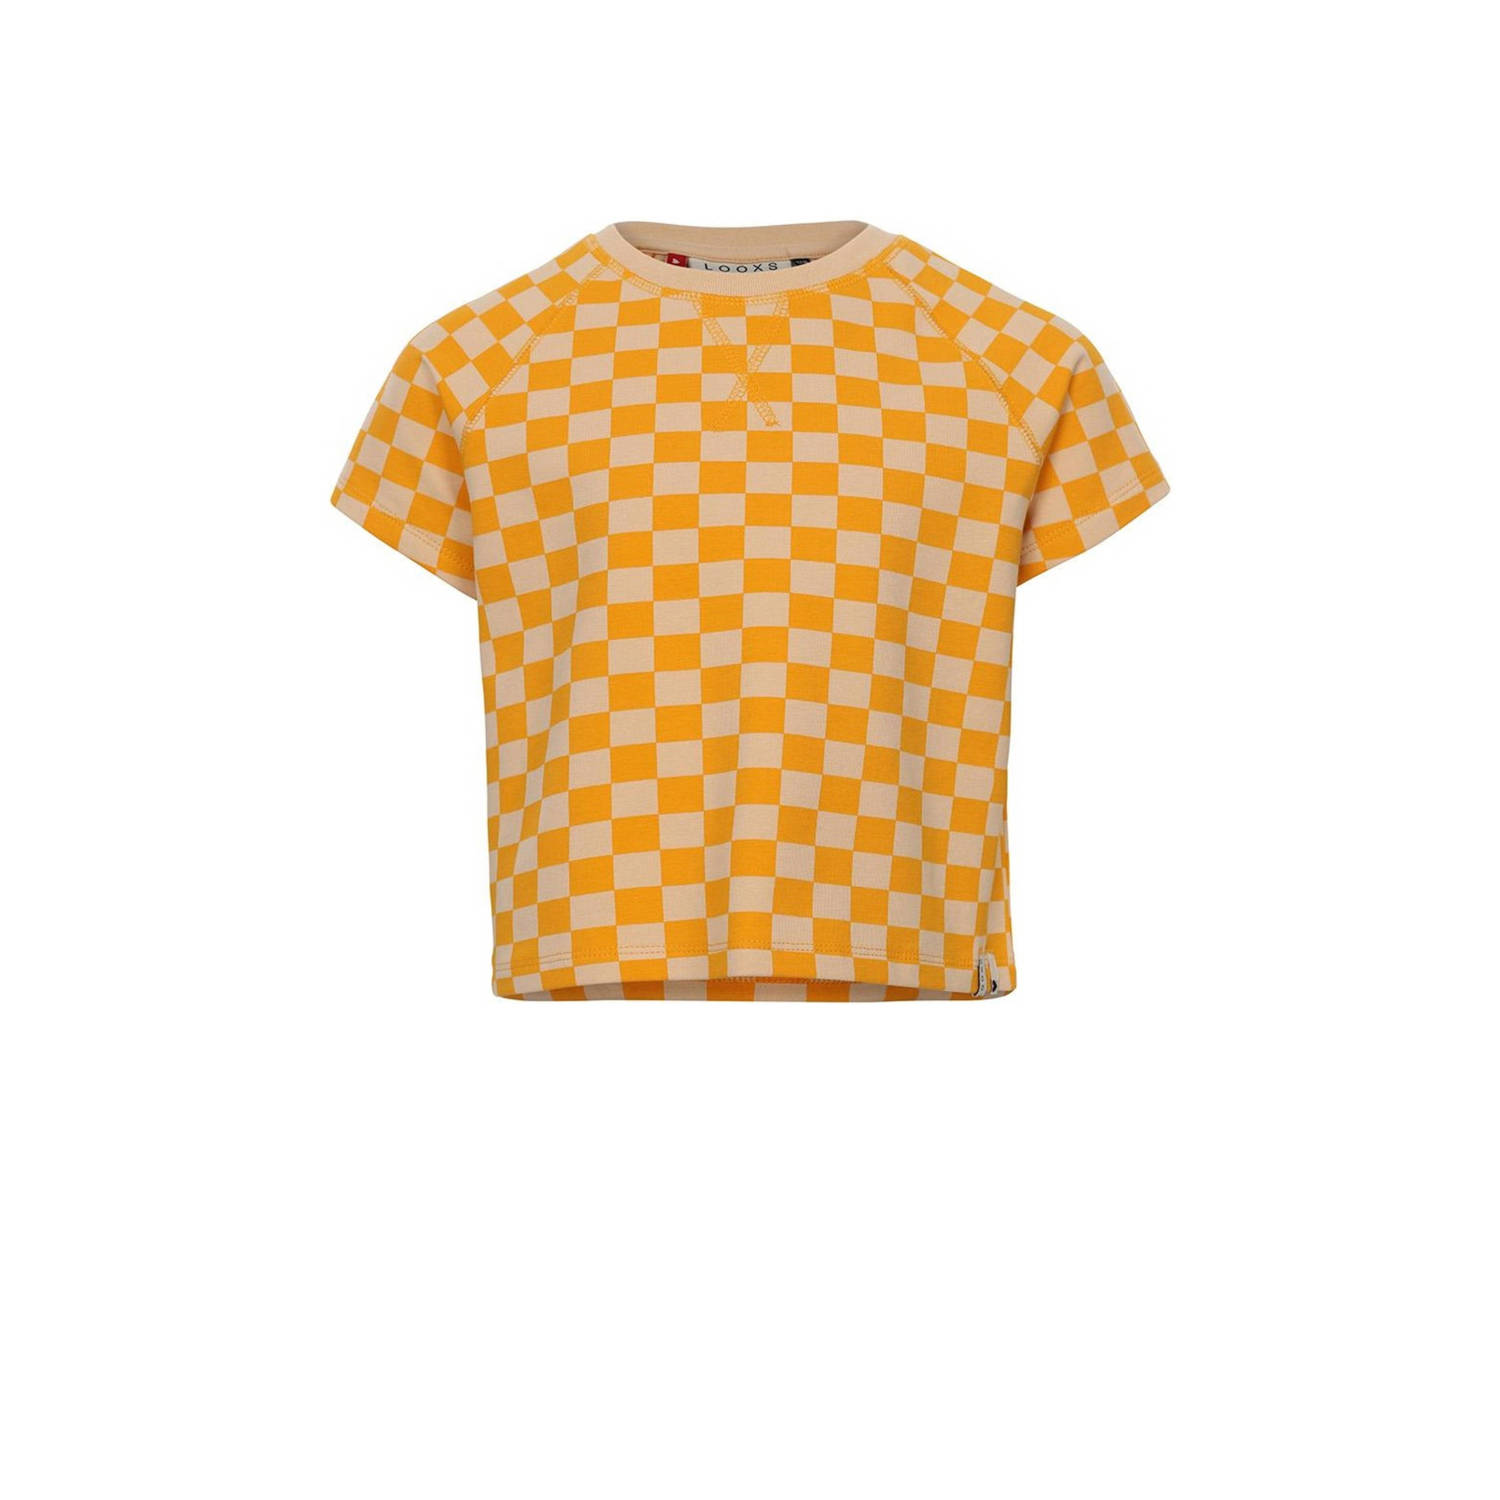 LOOXS little geruite top geel oranje T-shirt Meisjes Stretchkatoen Ronde hals 104